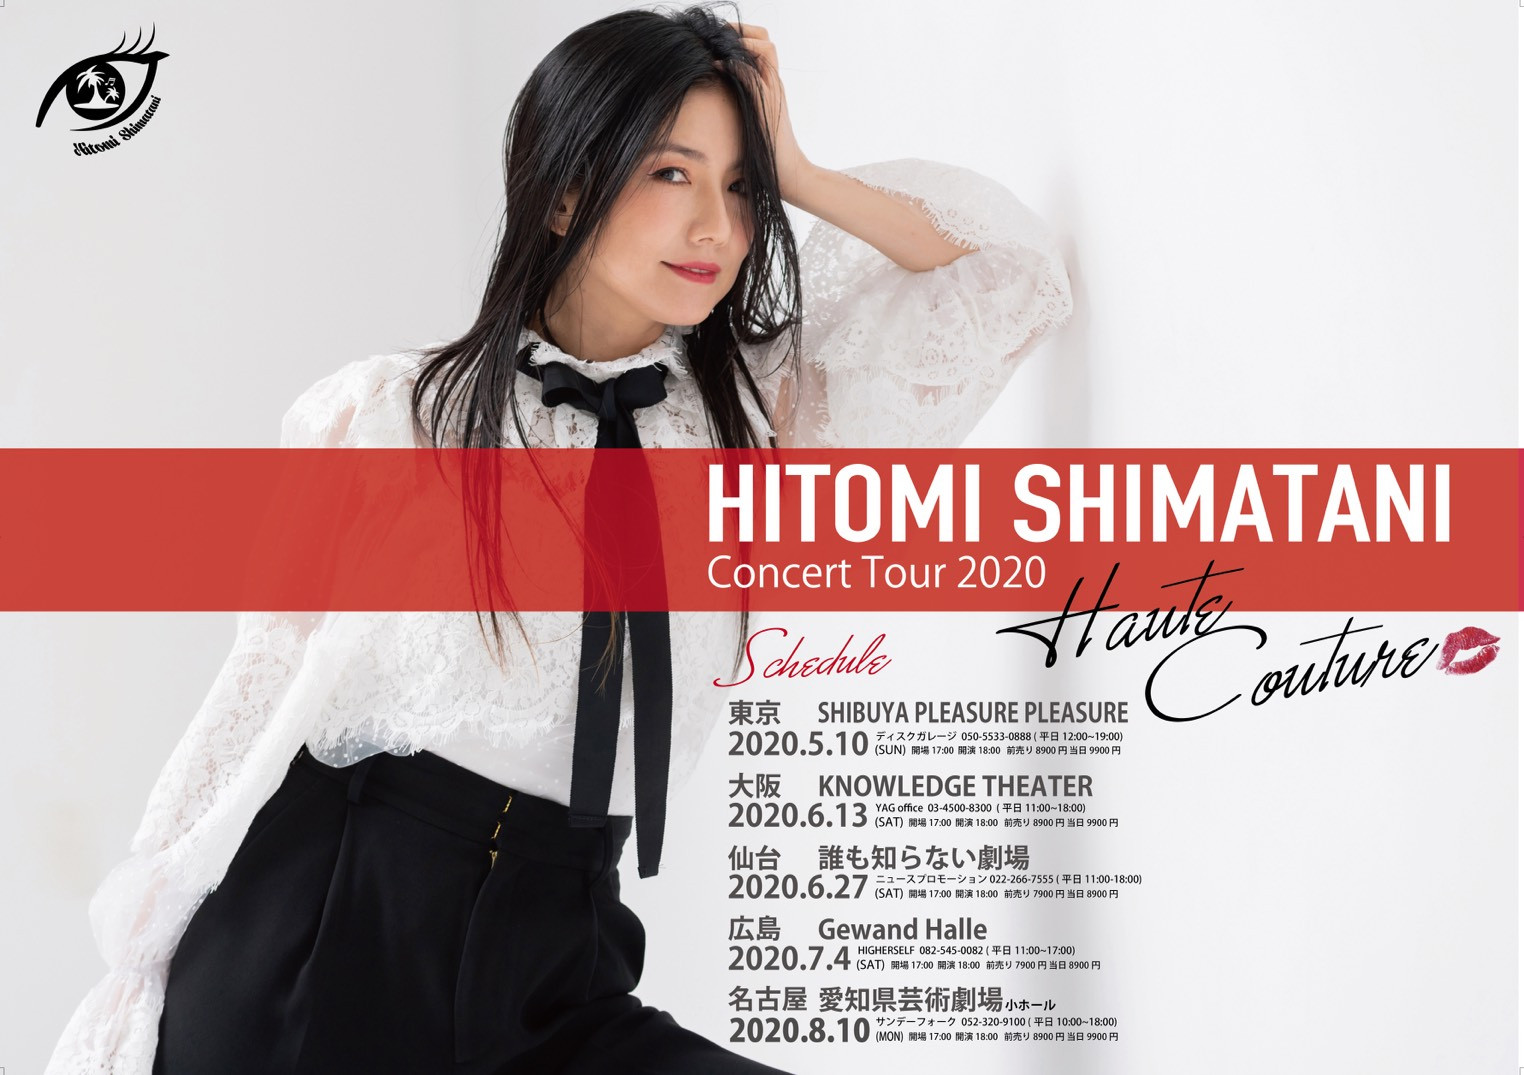 HITOMI SHIMATANI Concert Tour 2020 "haute couture" 